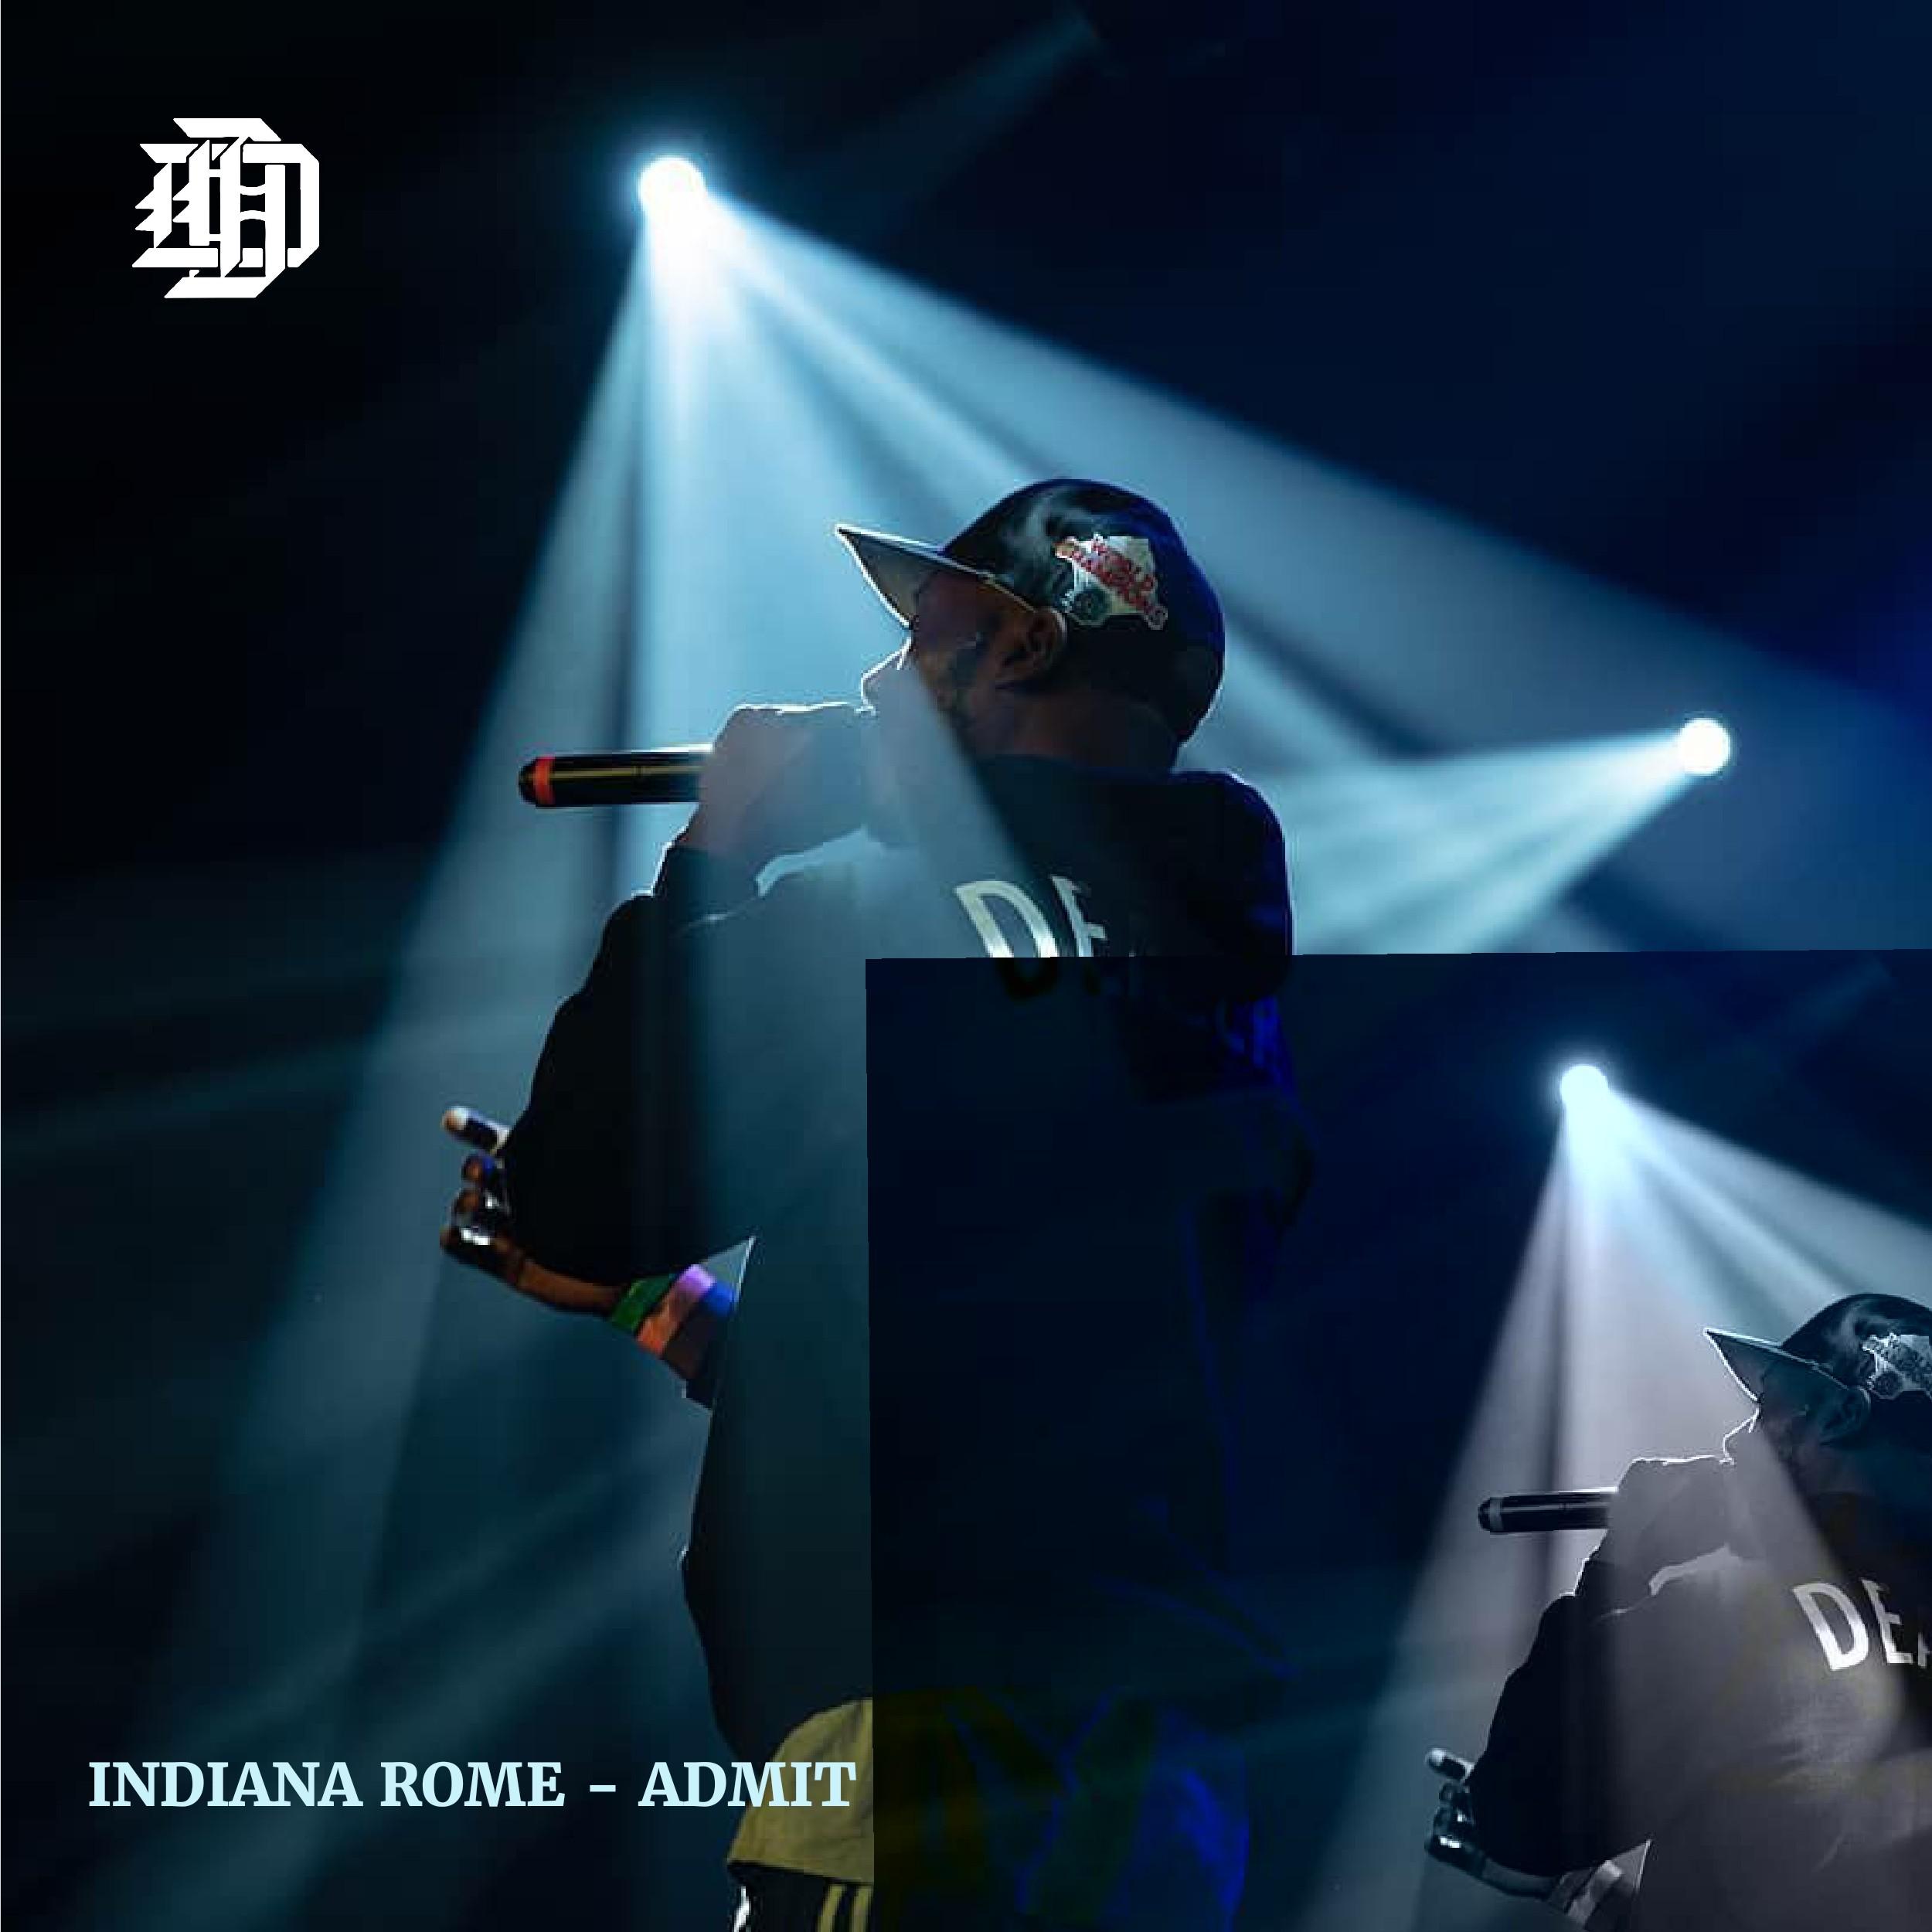 Indiana Rome - Admit